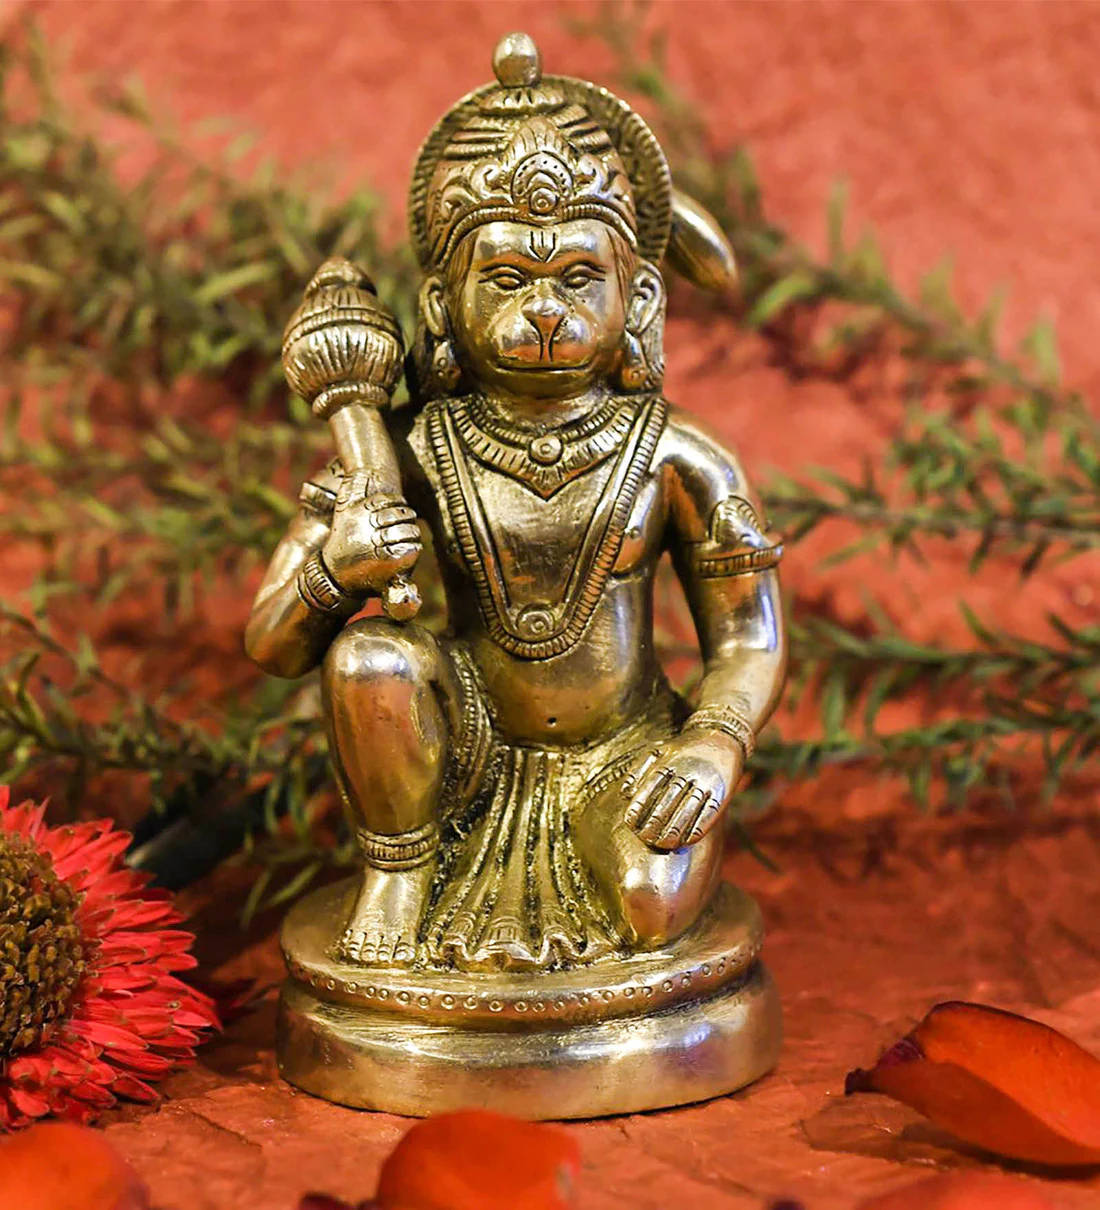 Kneeling Lord Hanuman 3d Gold Figure Wallpaper